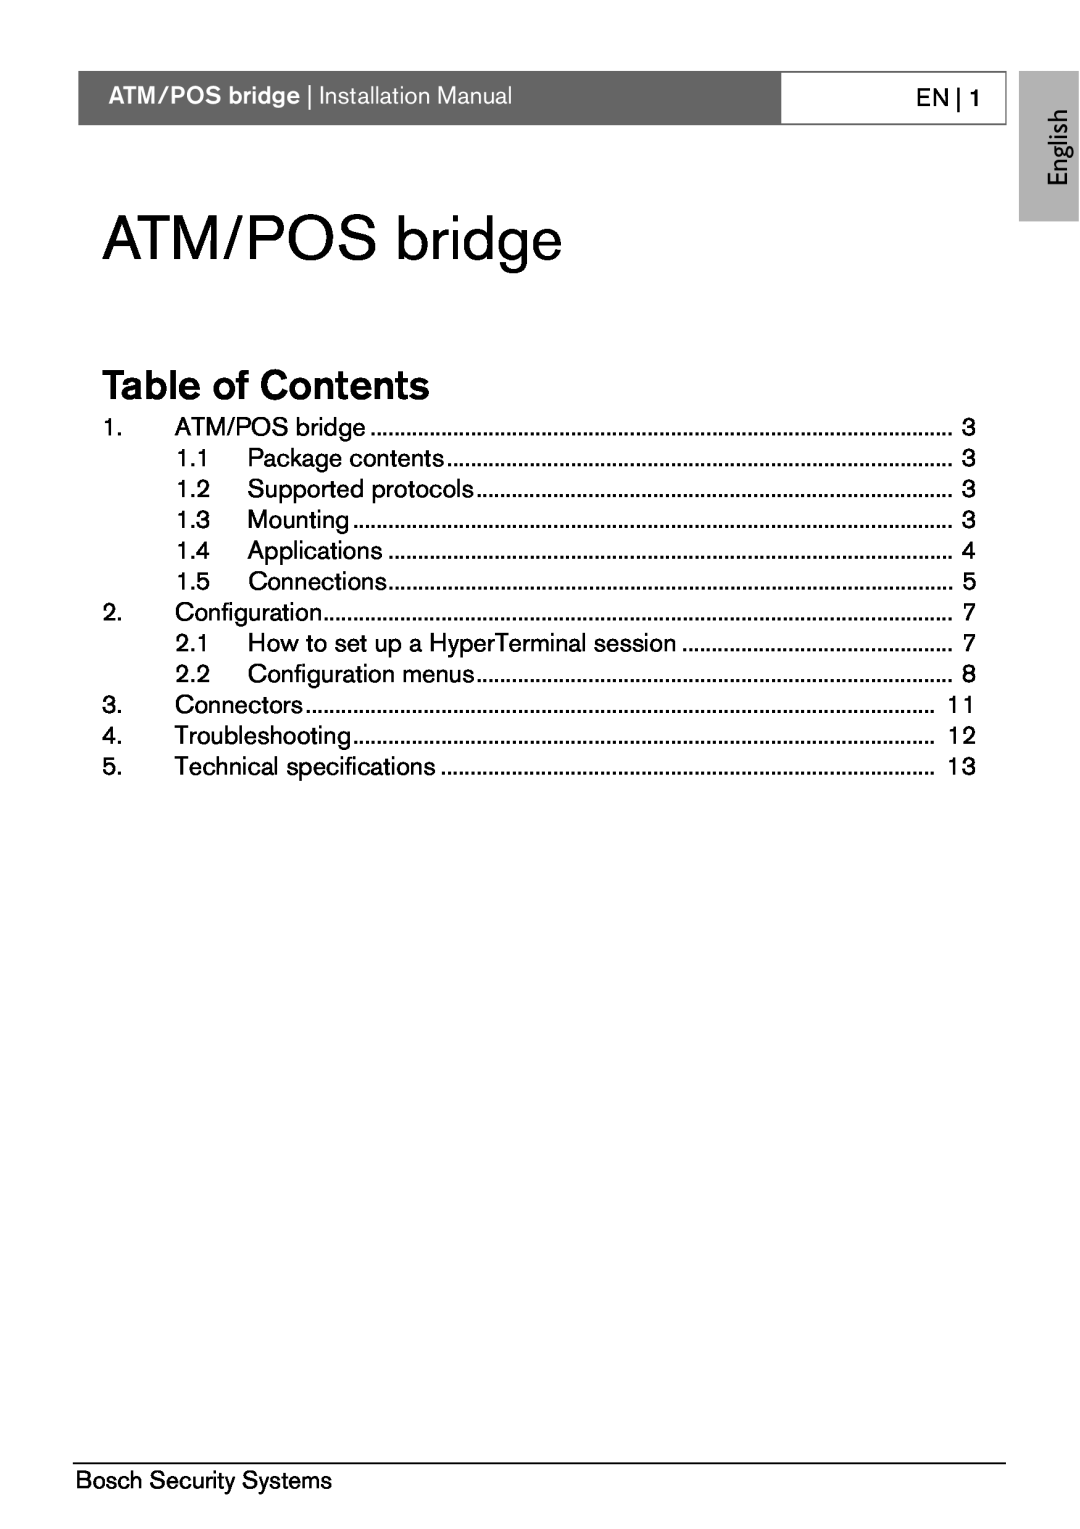 Bosch Appliances ATM/POS Bridge Table of Contents, English, ATM/POS bridge Installation Manual, Bosch Security Systems 